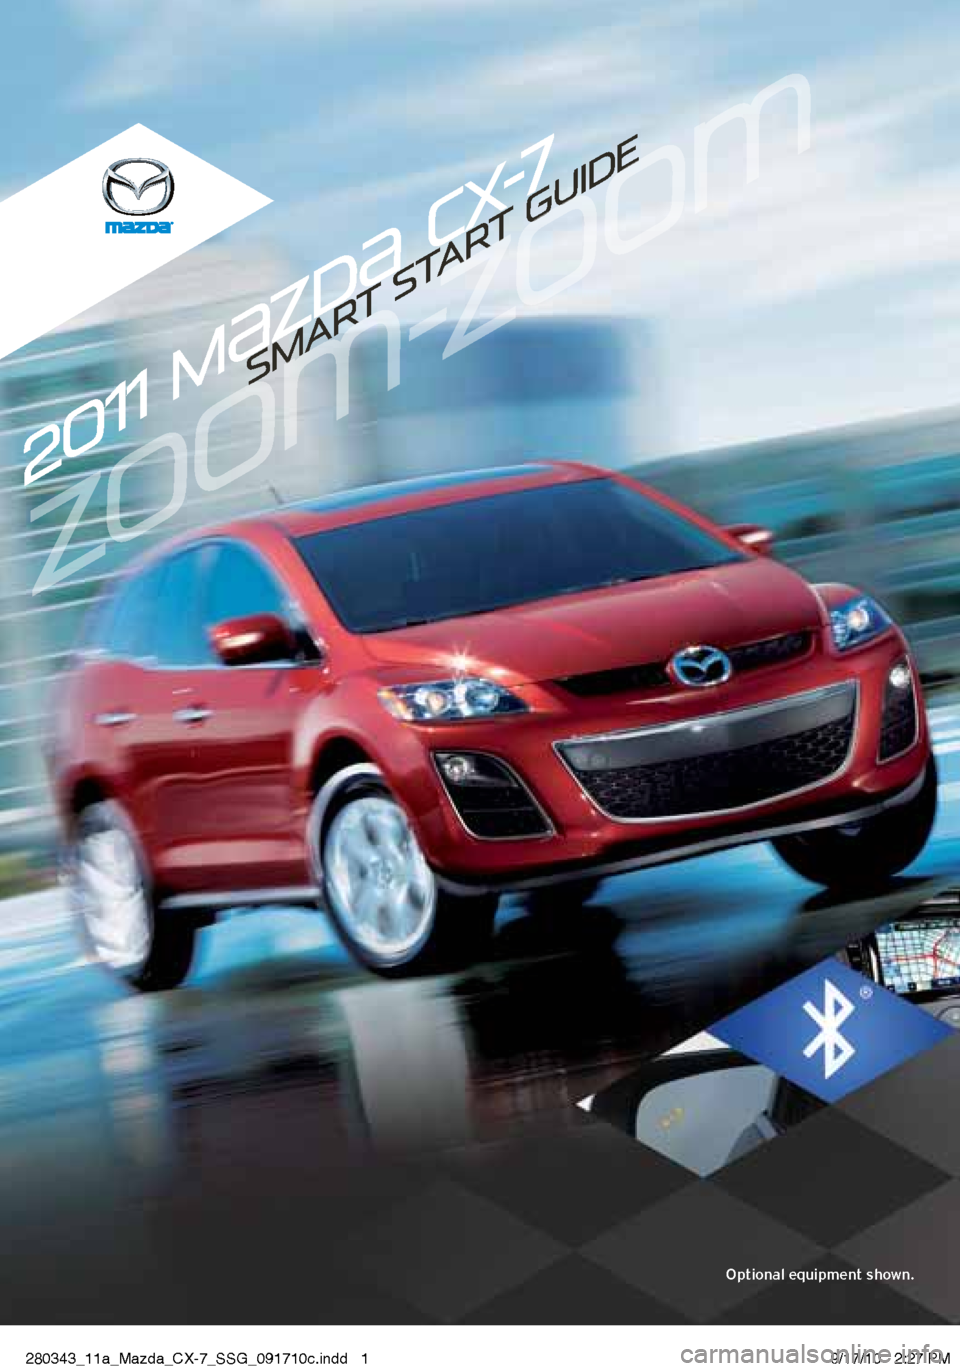 MAZDA MODEL CX-7 2011  Smart Start Guide (in English) 